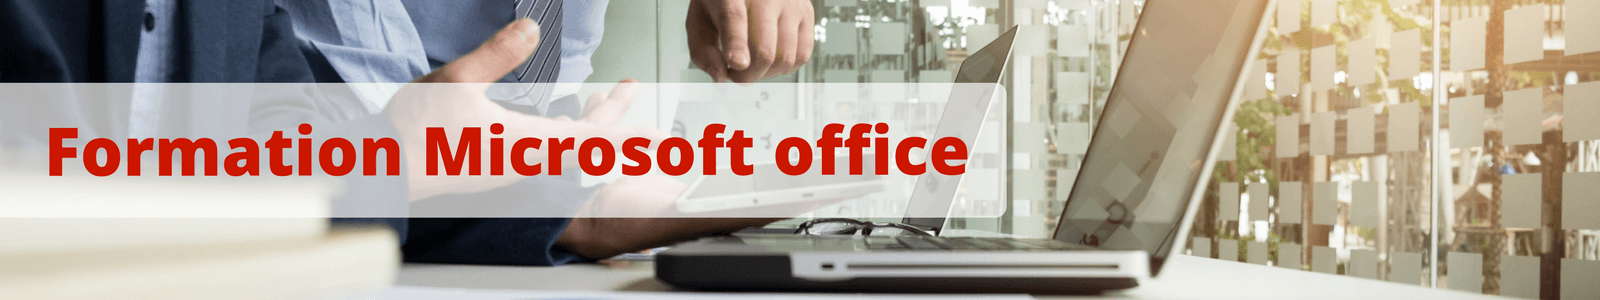 Formation Microsoft Office en Tunisie 